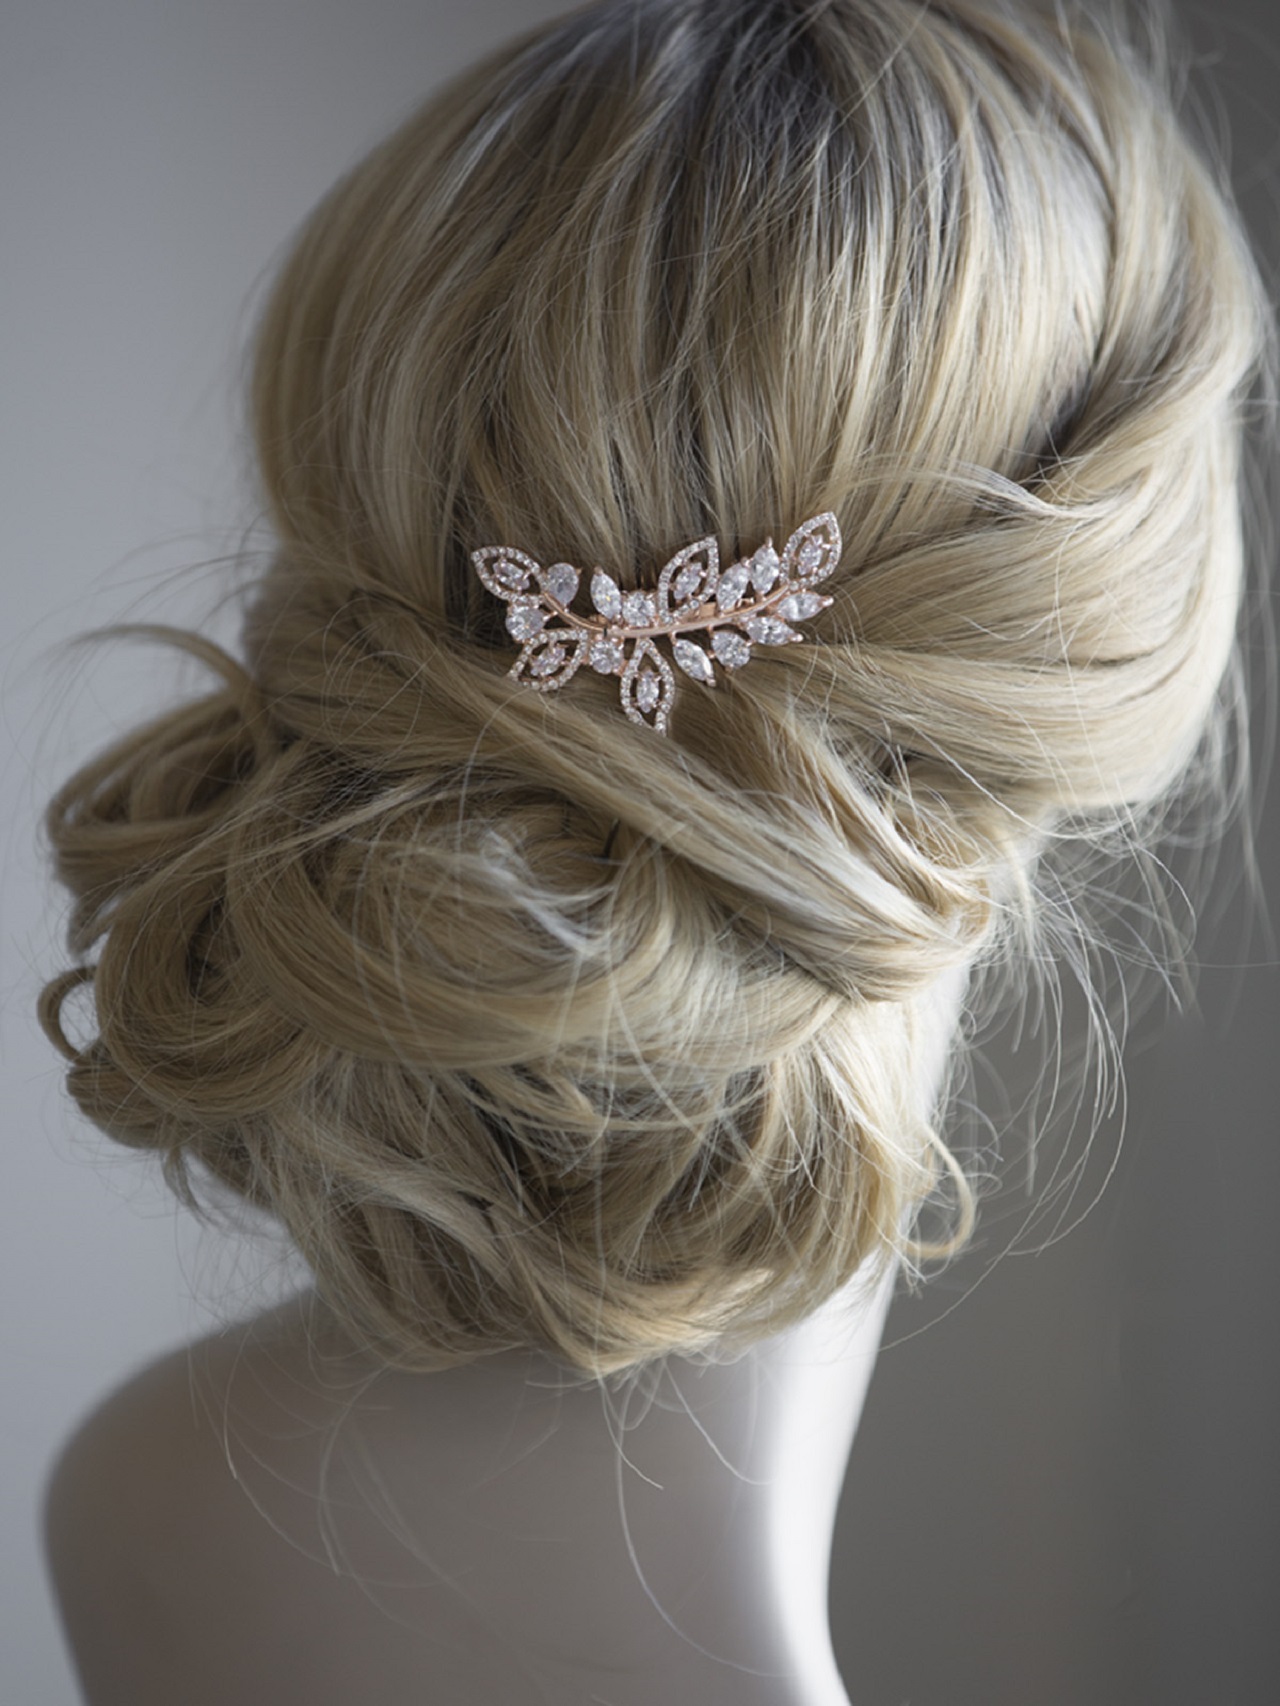 Crystal Hair Comb Bridal|Benita|Jeanette Maree|Shop Online